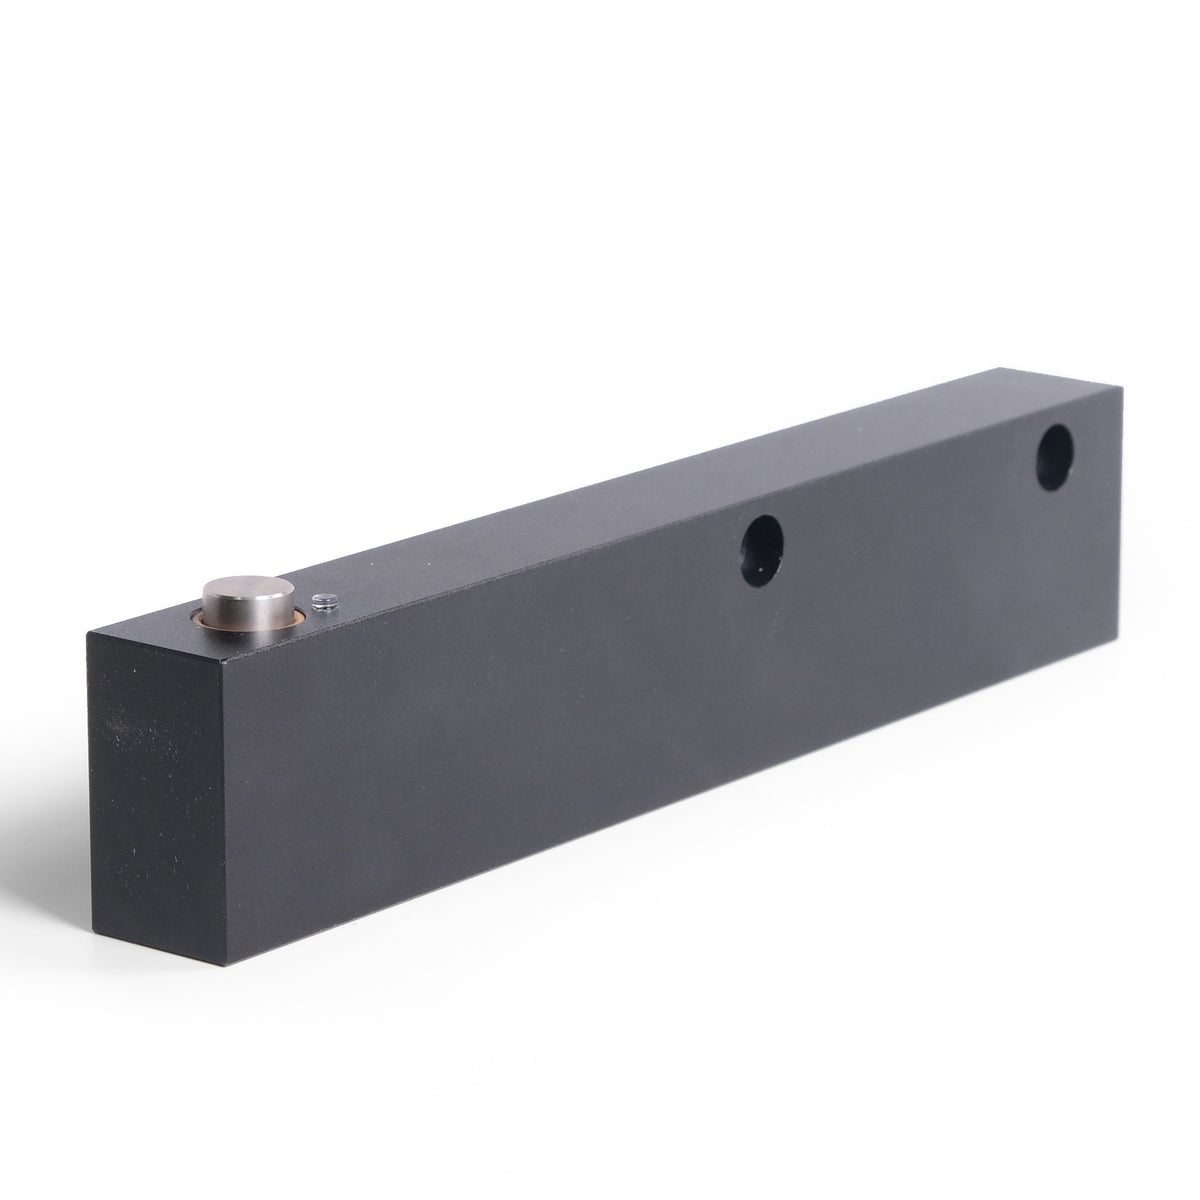 Vinyl cutter attachment with standard vinyl drag knife - Shapeoko - Carbide  3D Community Site